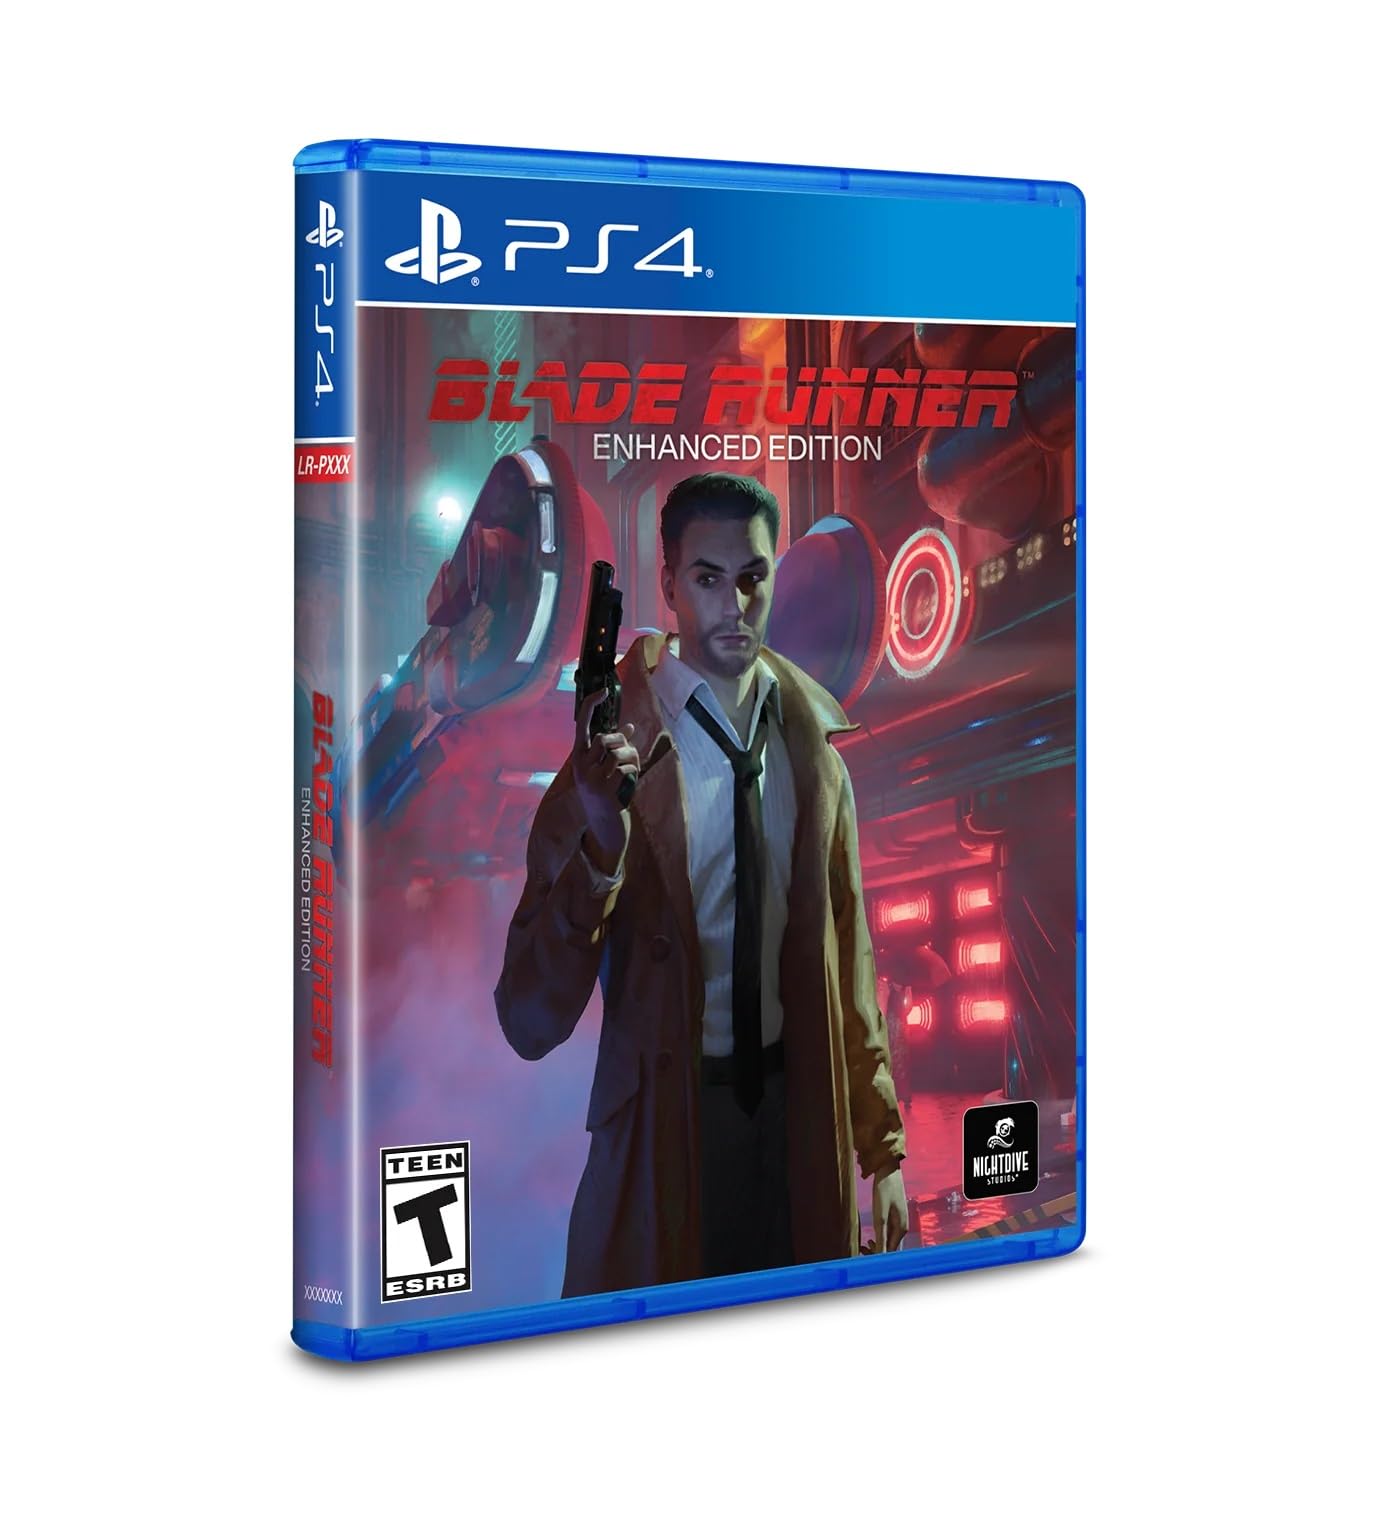 Blade Runner Enhanced Edition (Limited Run #466) - for PlayStation 4